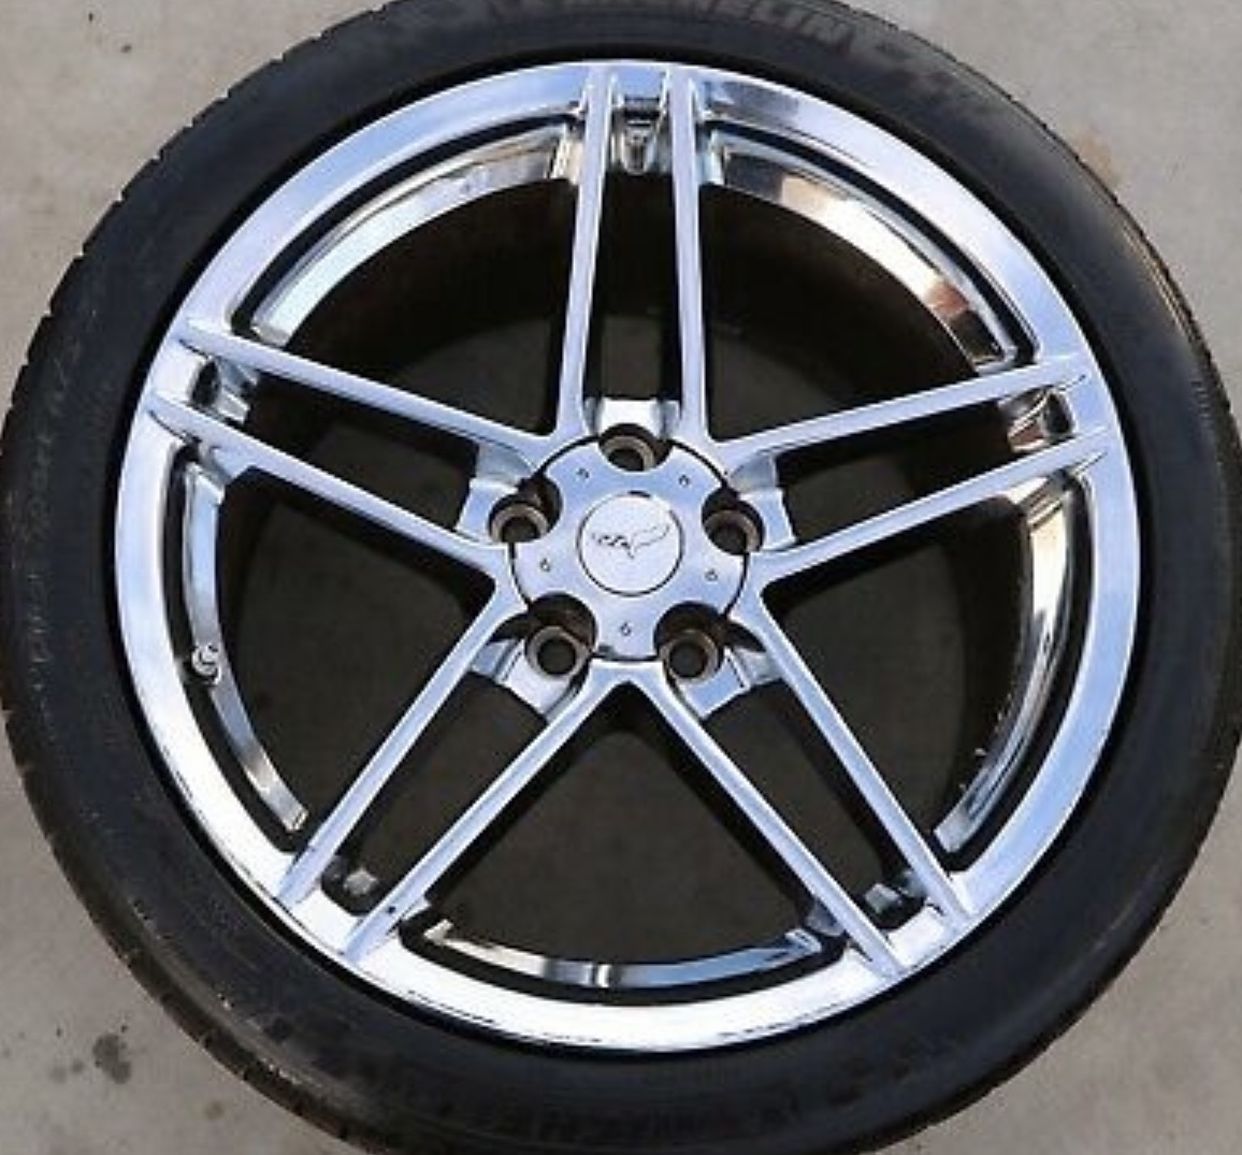 Z06 Chrome 19x12 factory Rear Wheels Rims